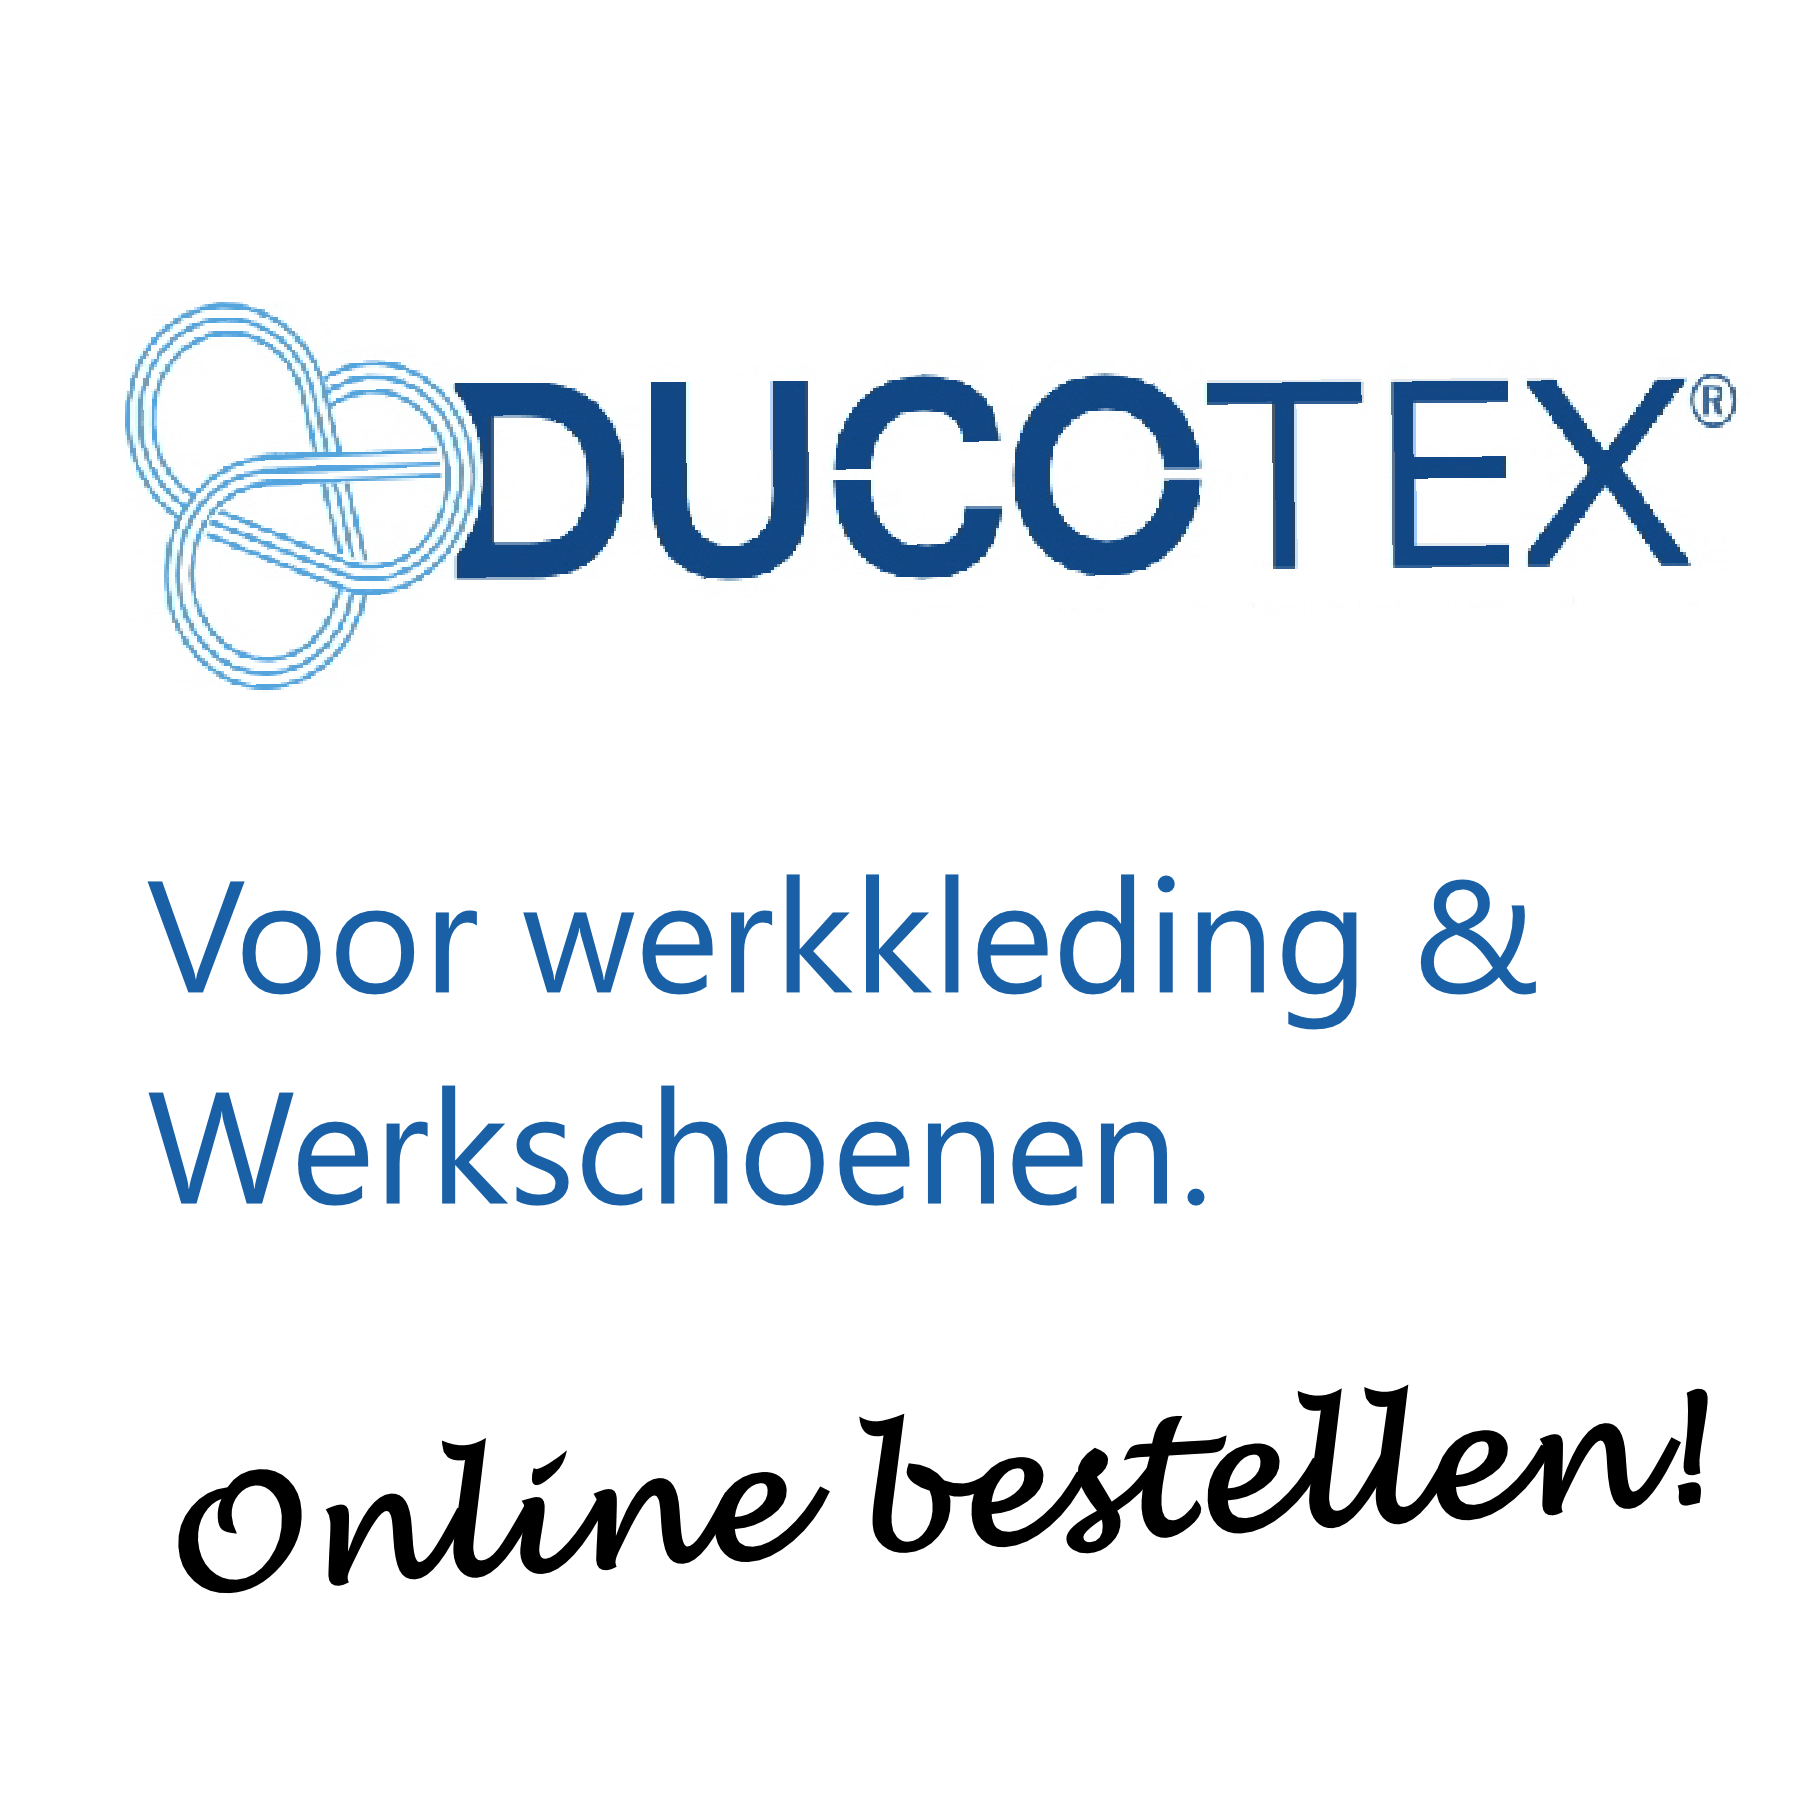 Ducotex, korting werkbroeken